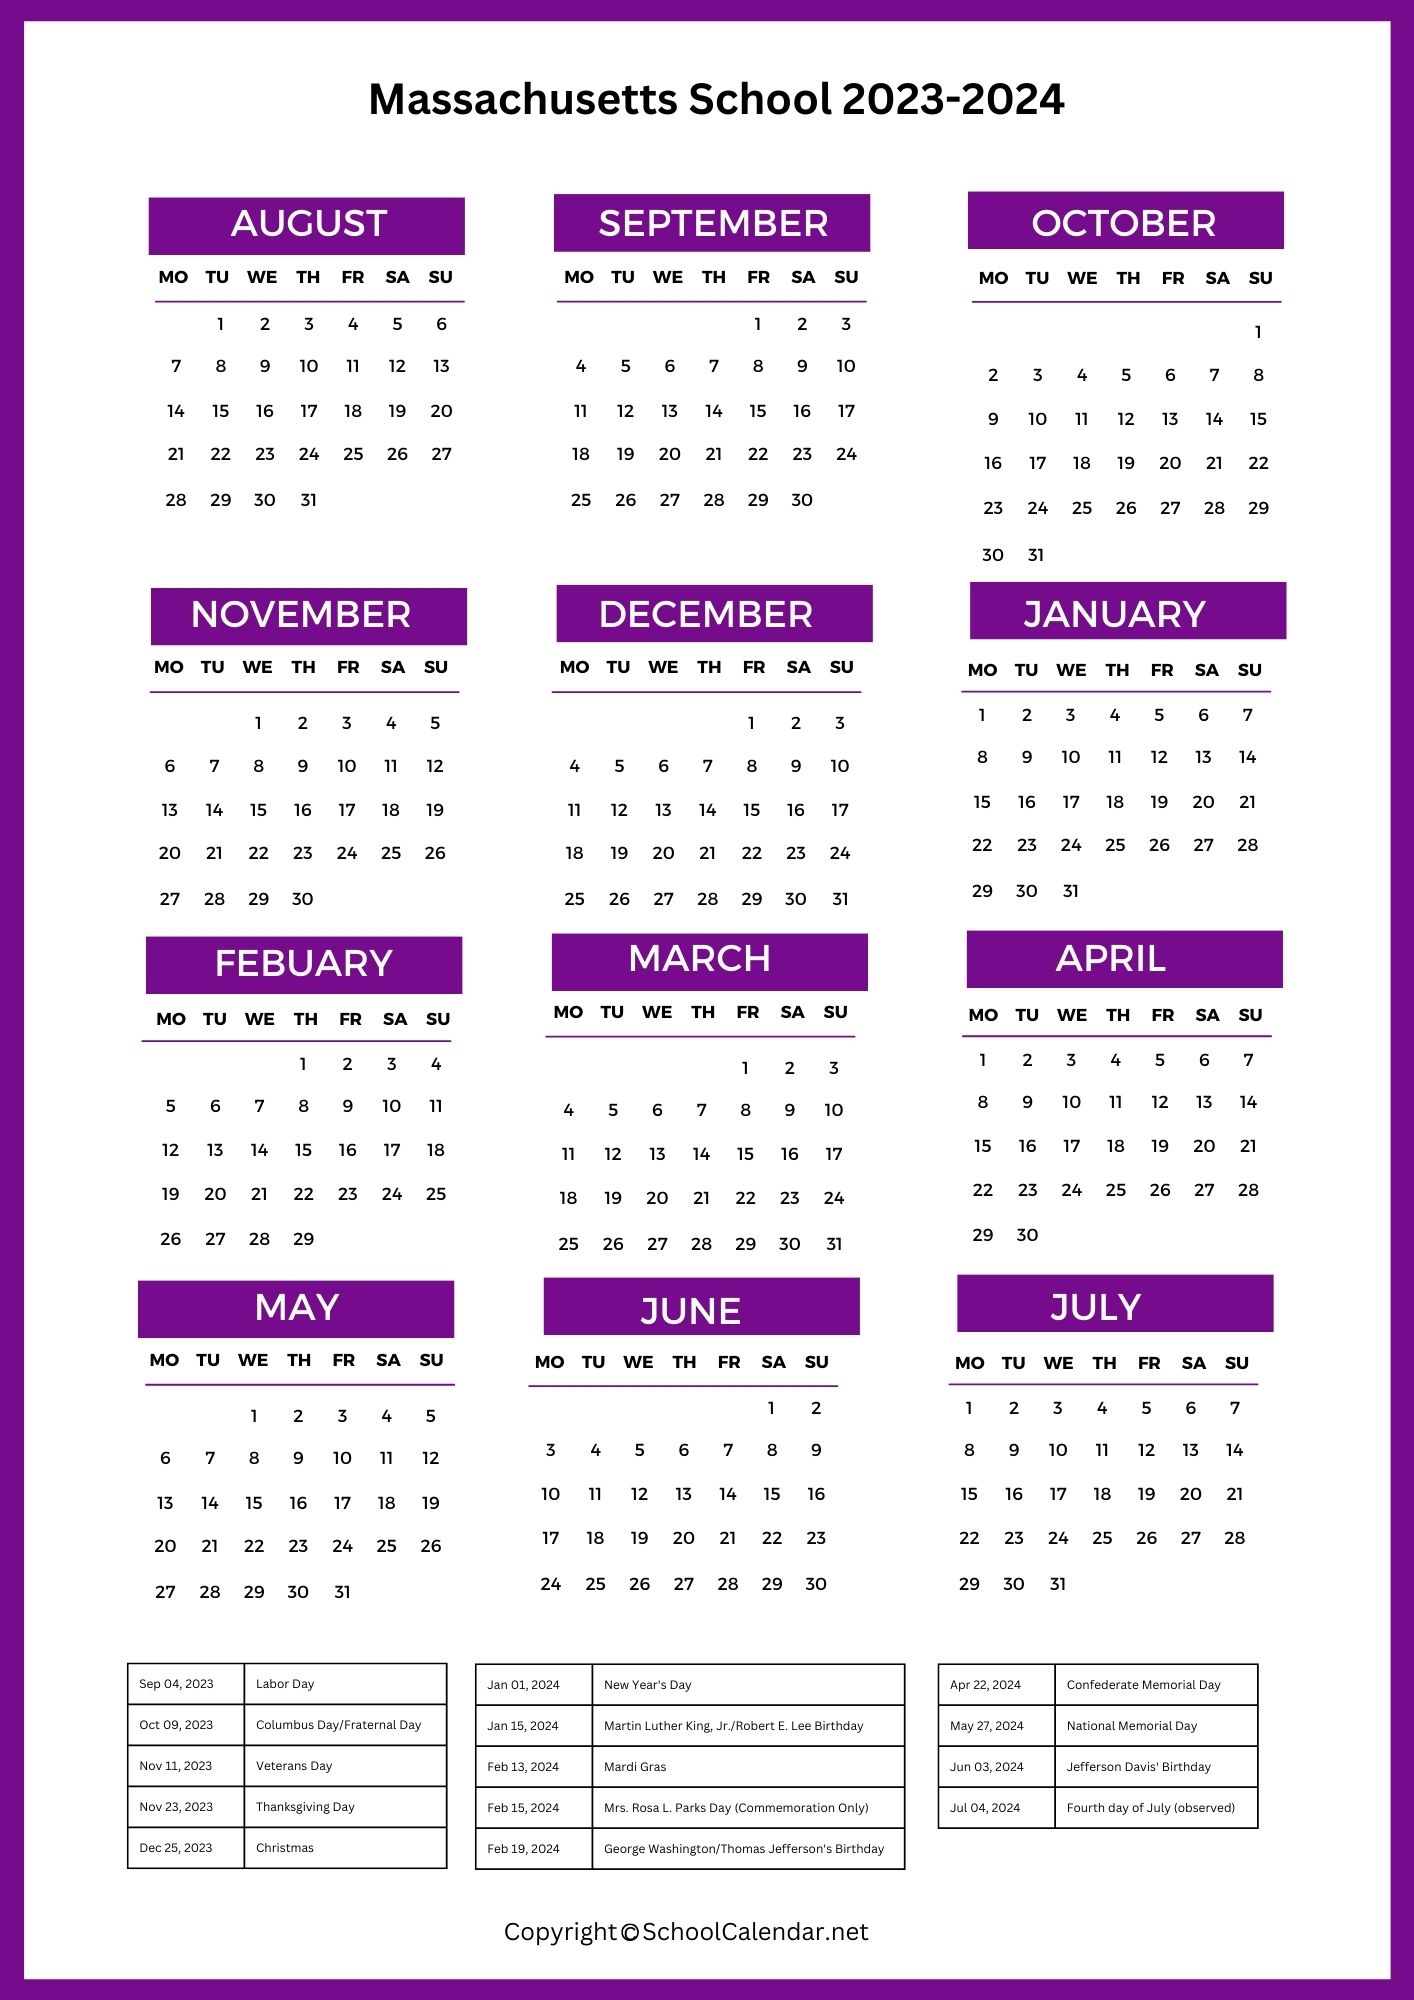 Massachusetts School Holiday Schedule 2023